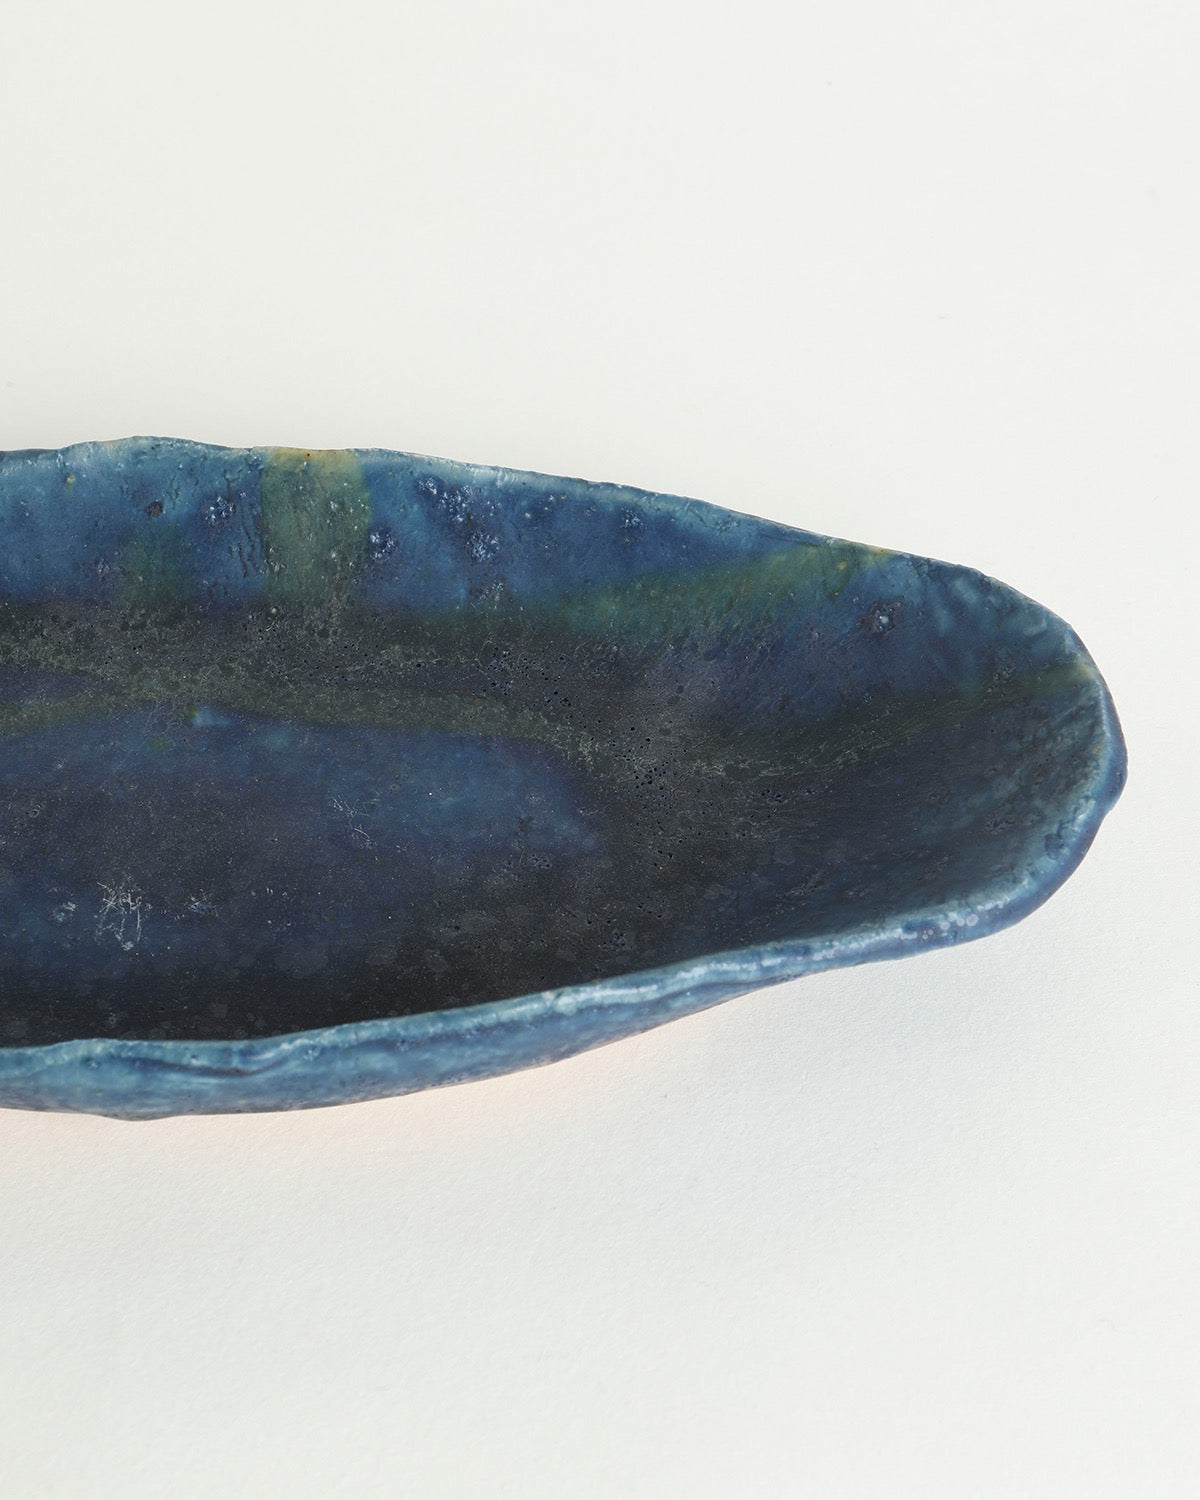 楕円皿 小 - 青の釉景